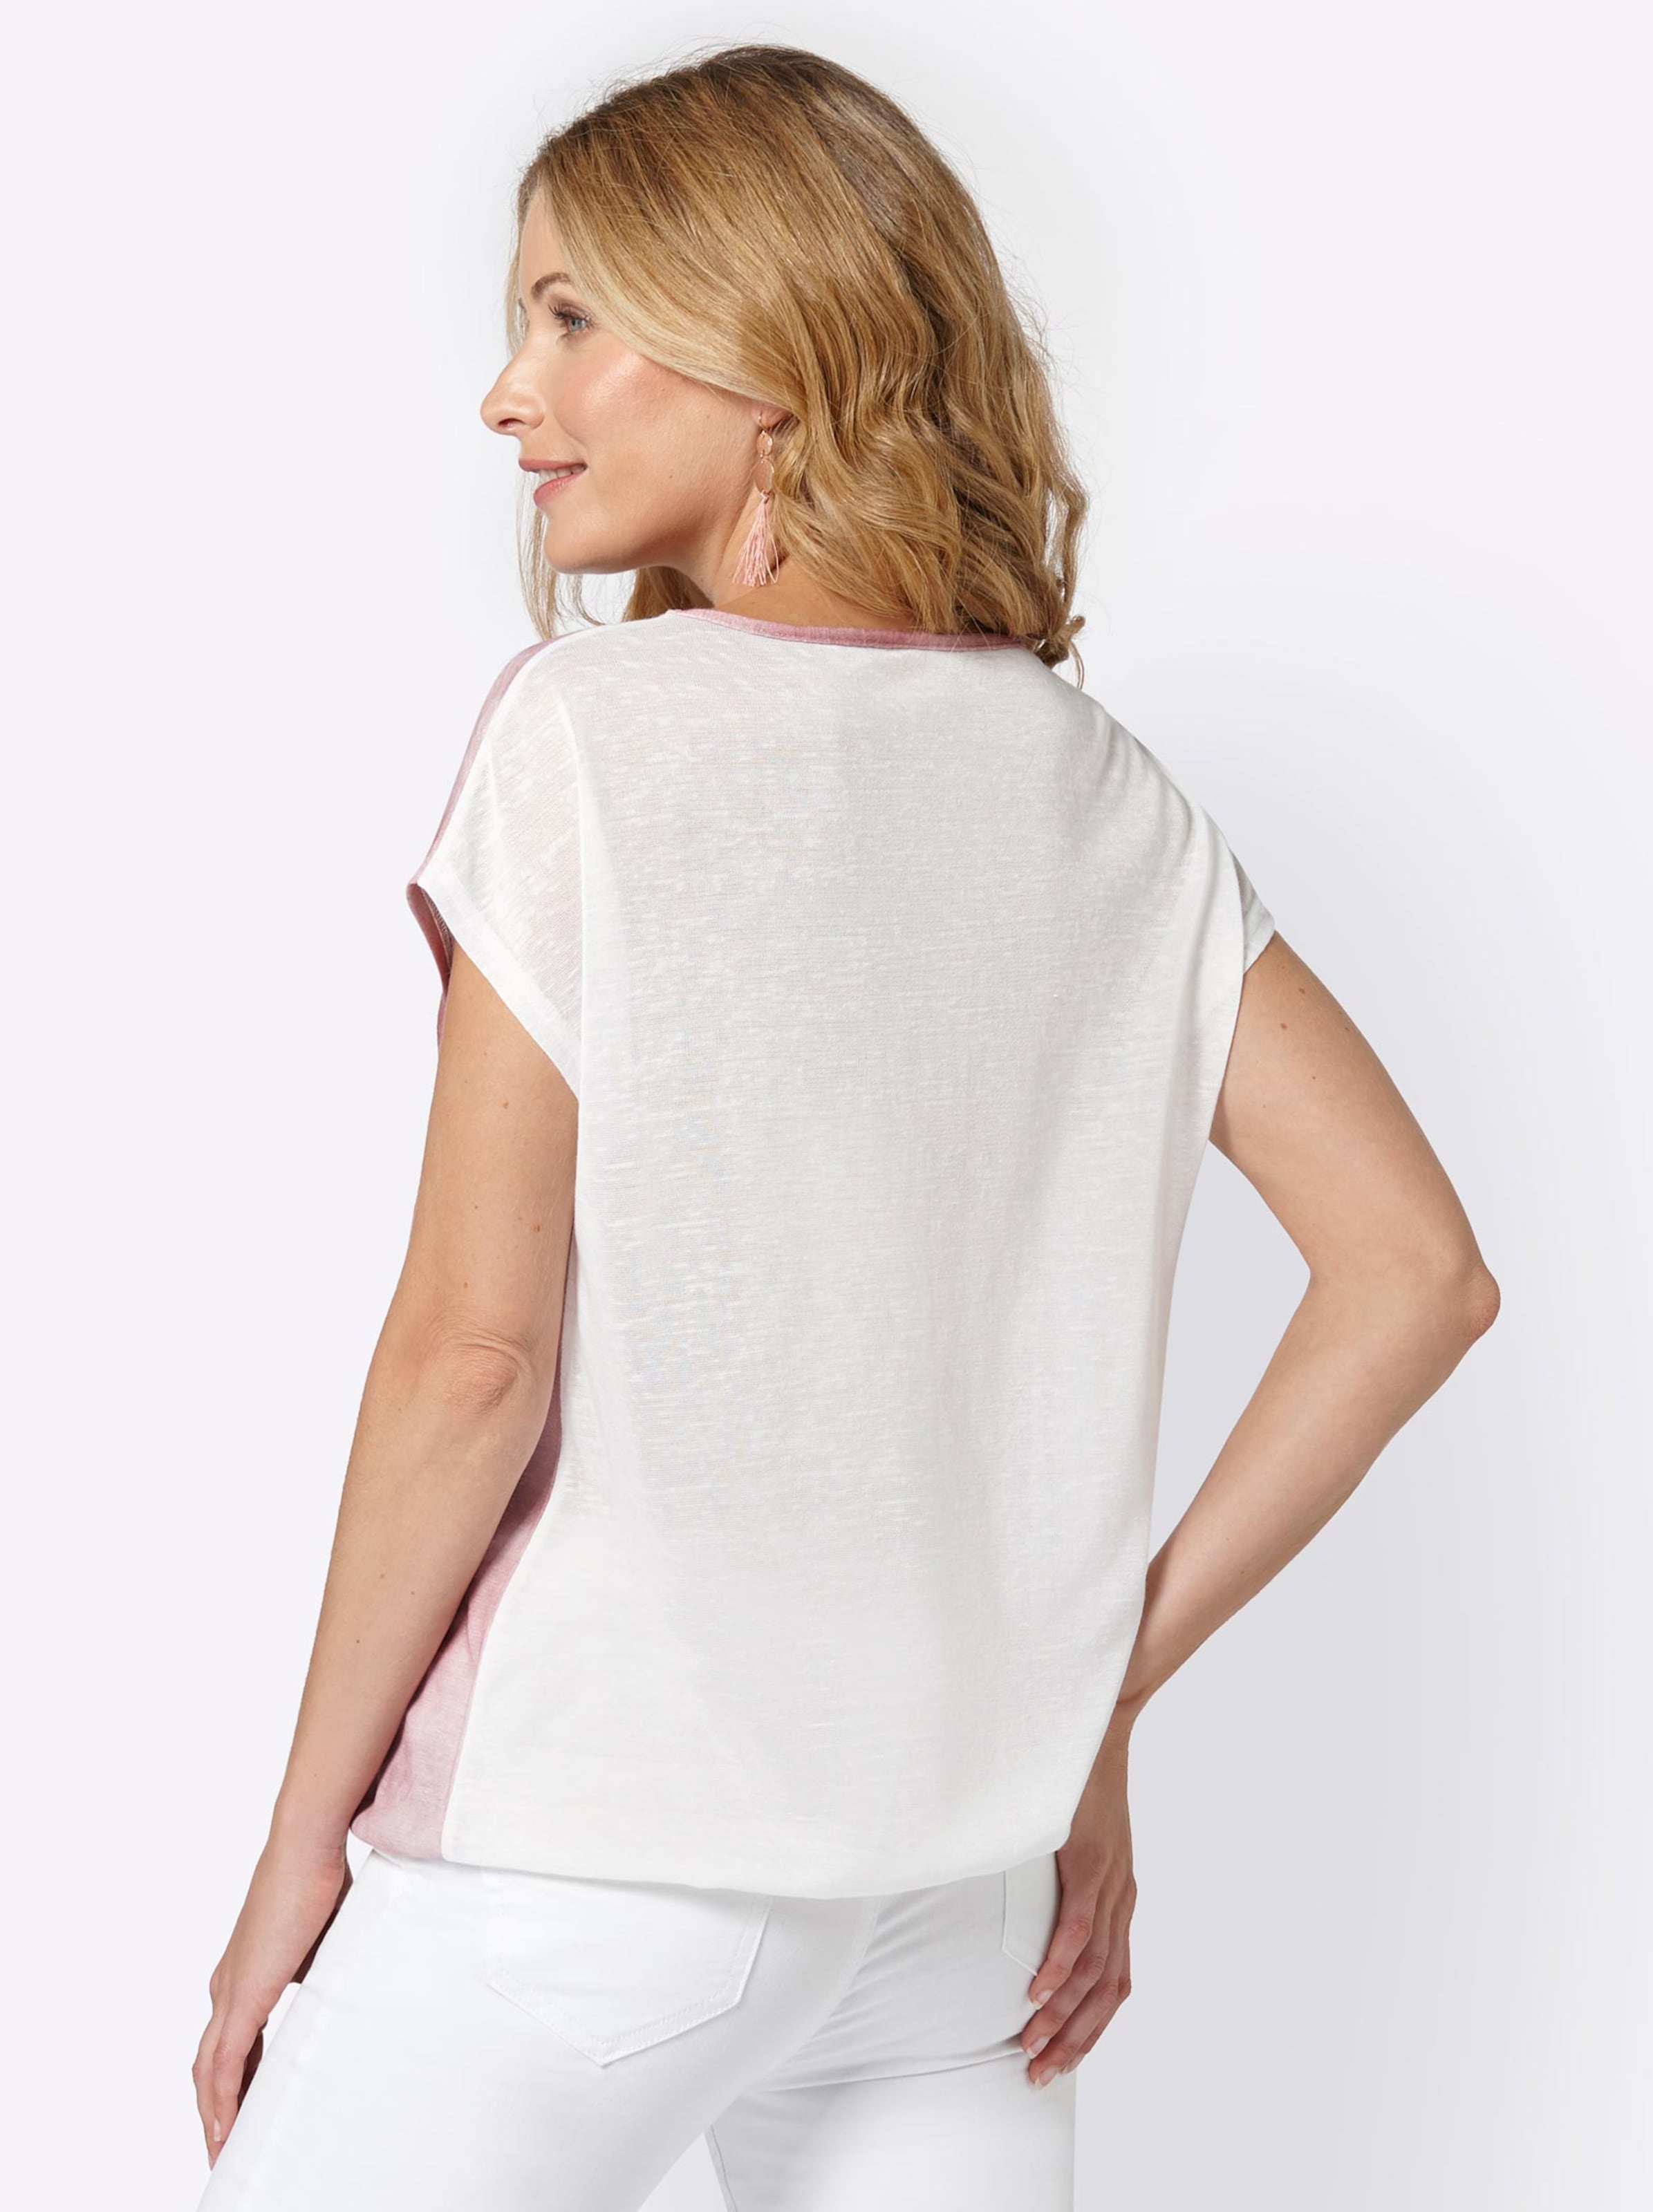 Damenmode Shirts Rundhalsshirt in rosenholz-ecru-gemustert 